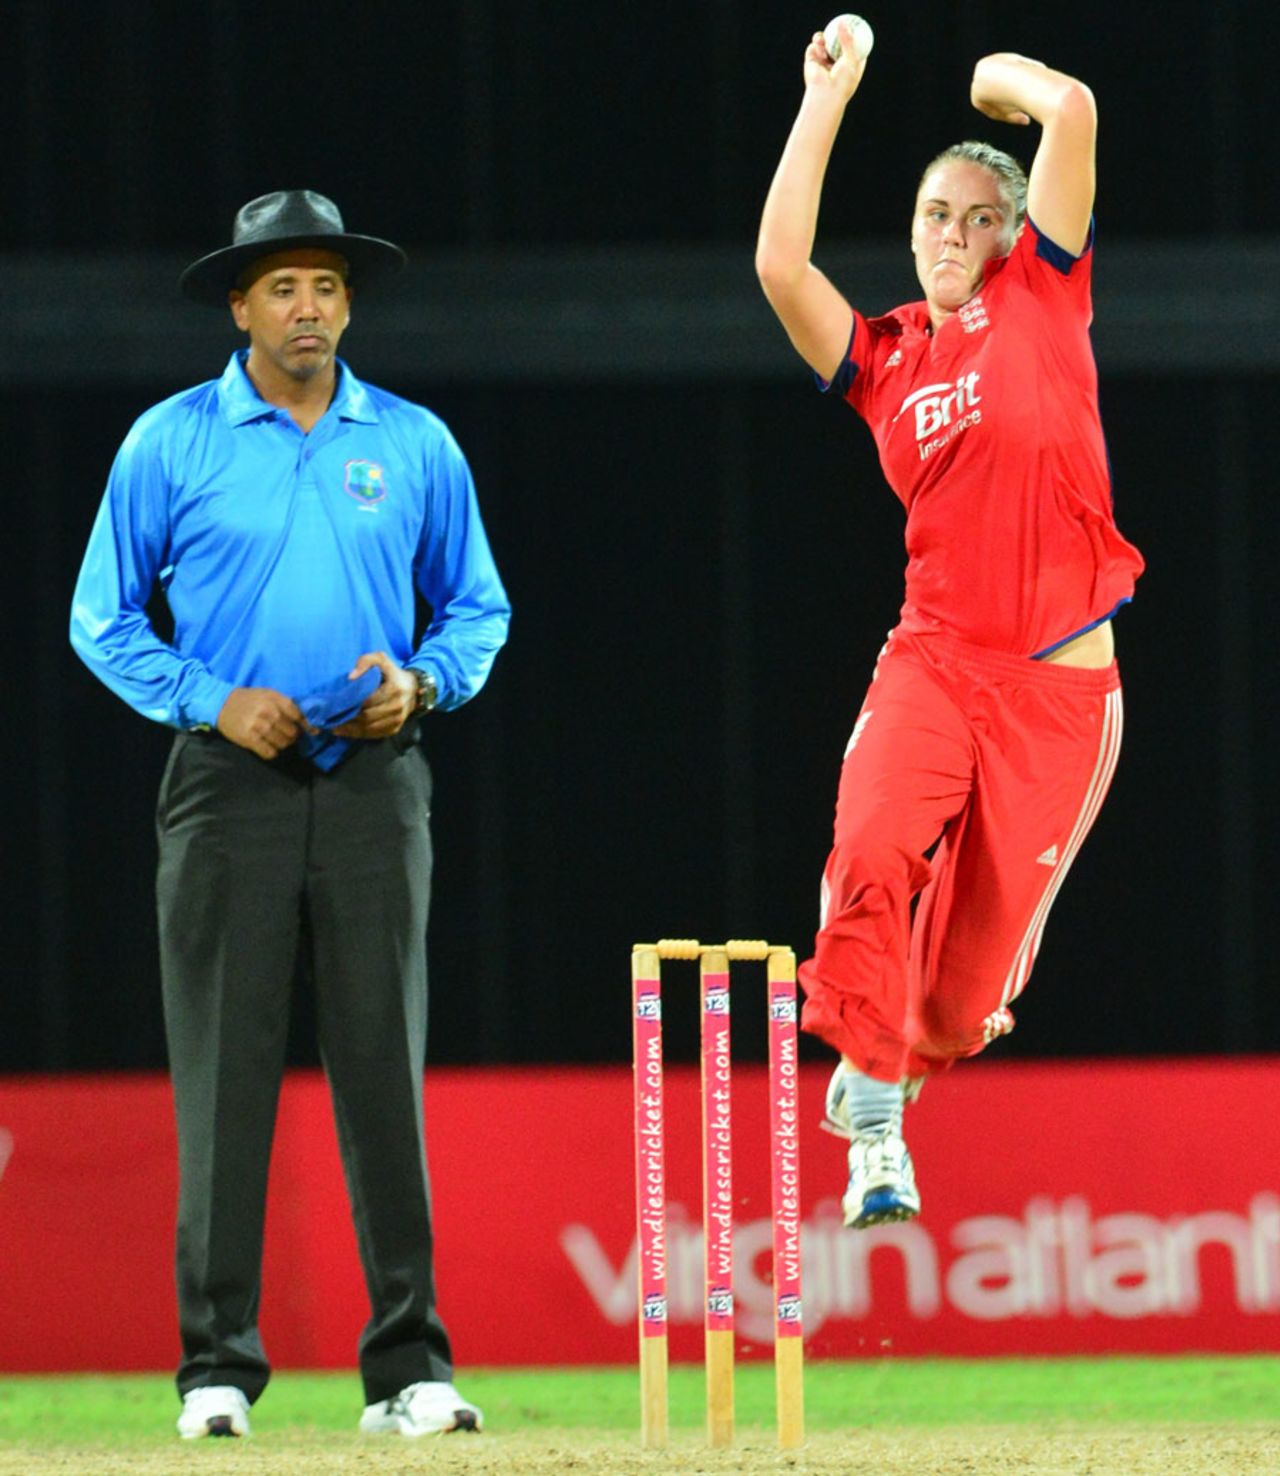 Natalie Sciver took a hat-trick against New Zealand Women, England Women v New Zealand Women, West Indies Tri-Nation Series, Barbados, October 22, 2013